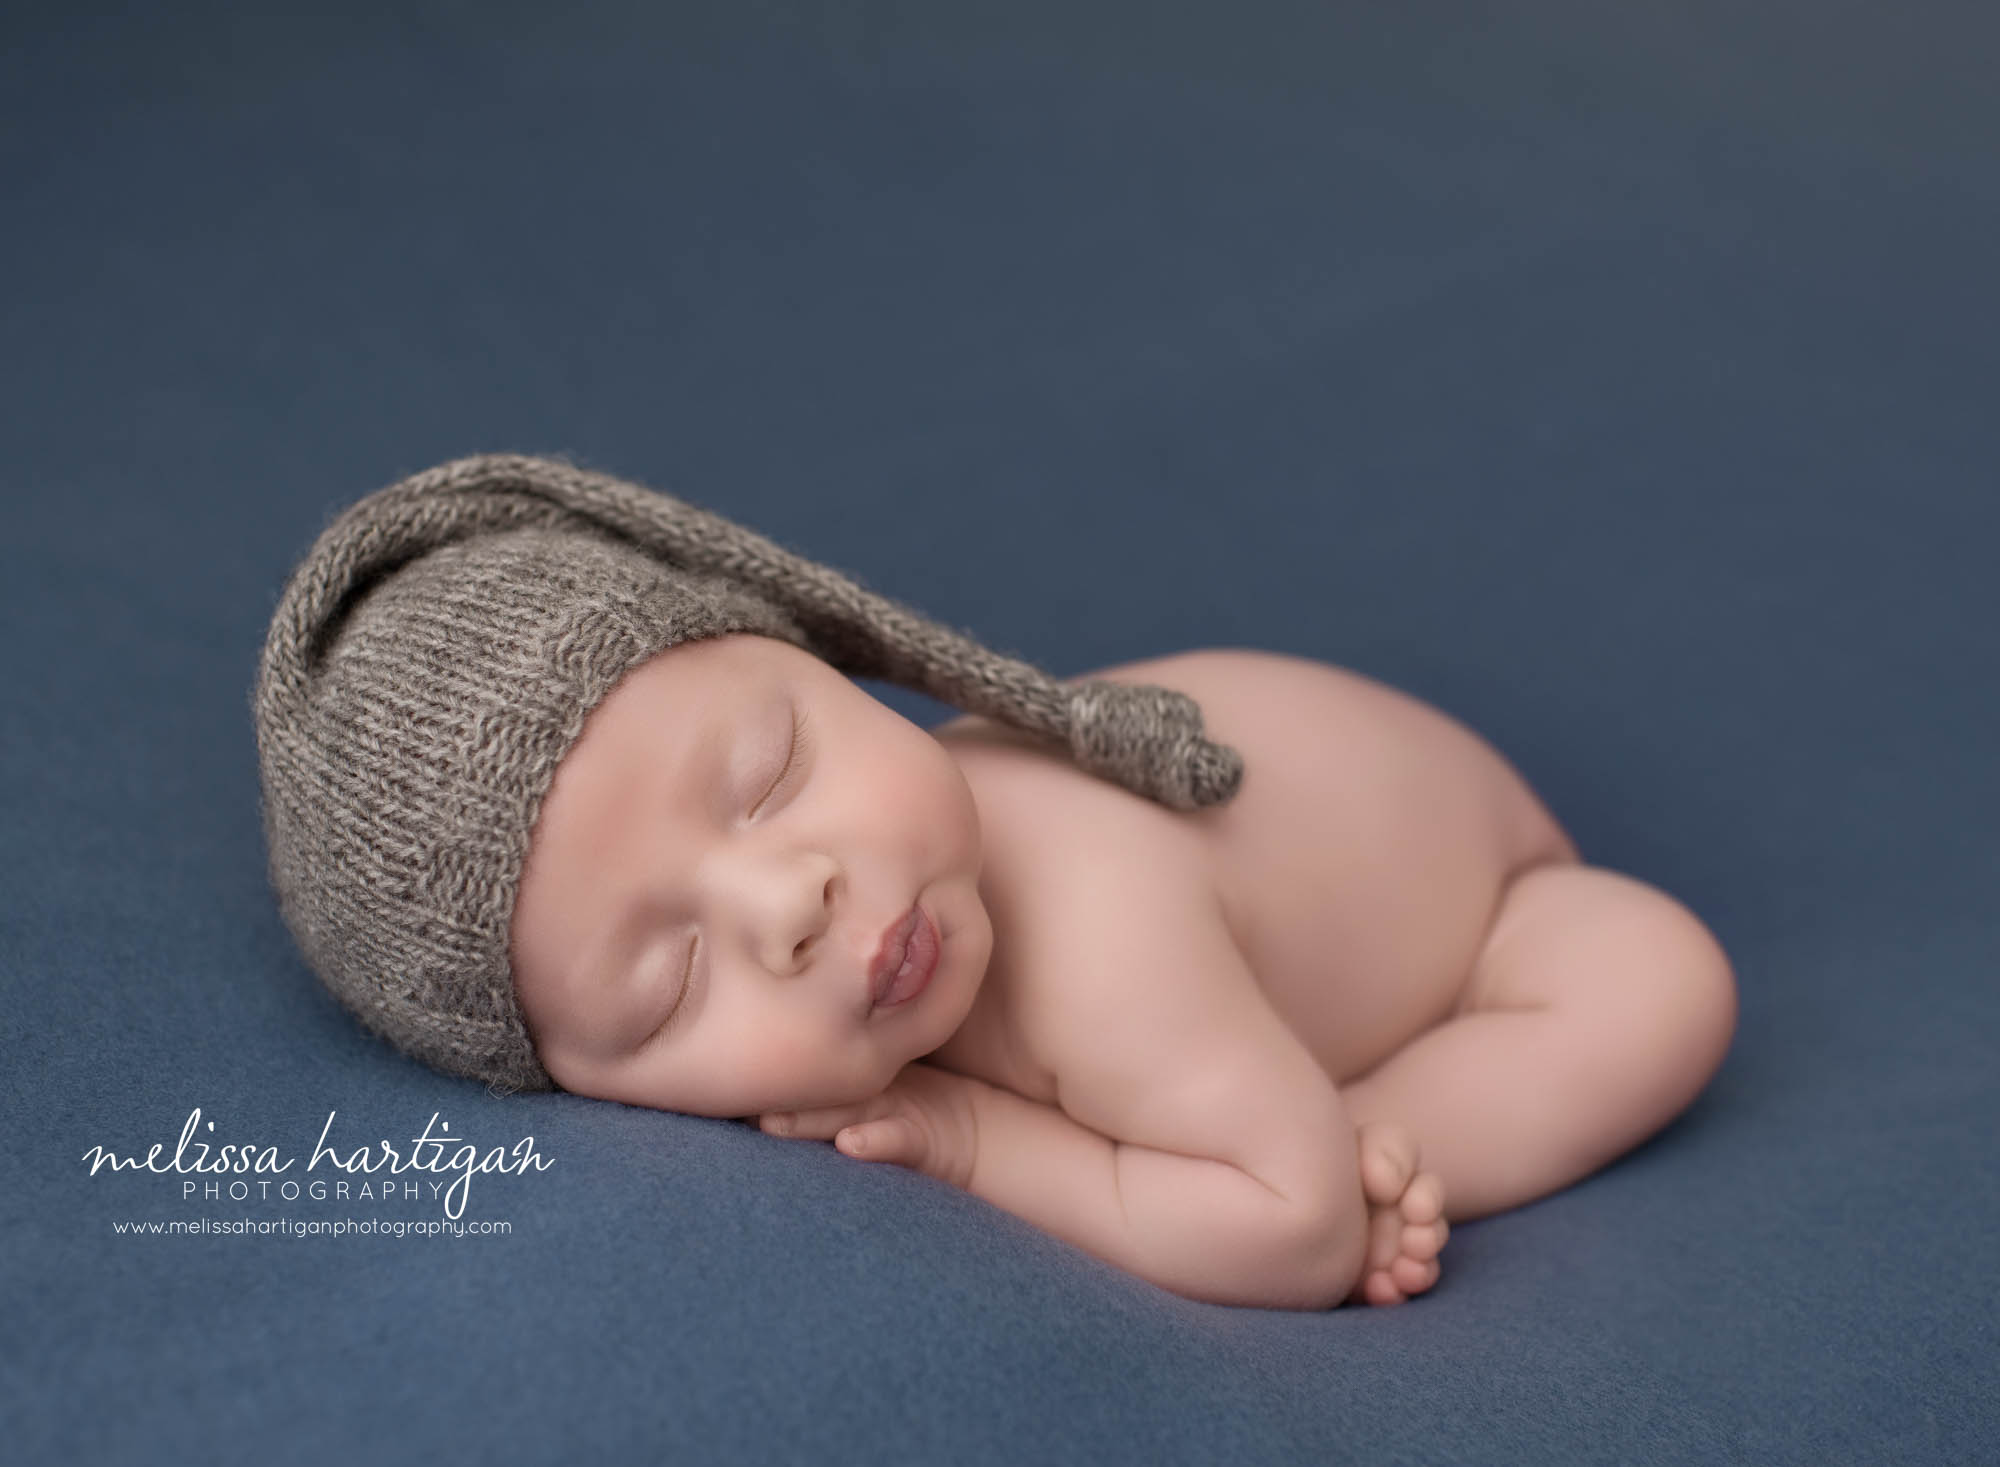 newborn abby boy posed on side tummy wearing sleepy cap newborn Photography unionville CT